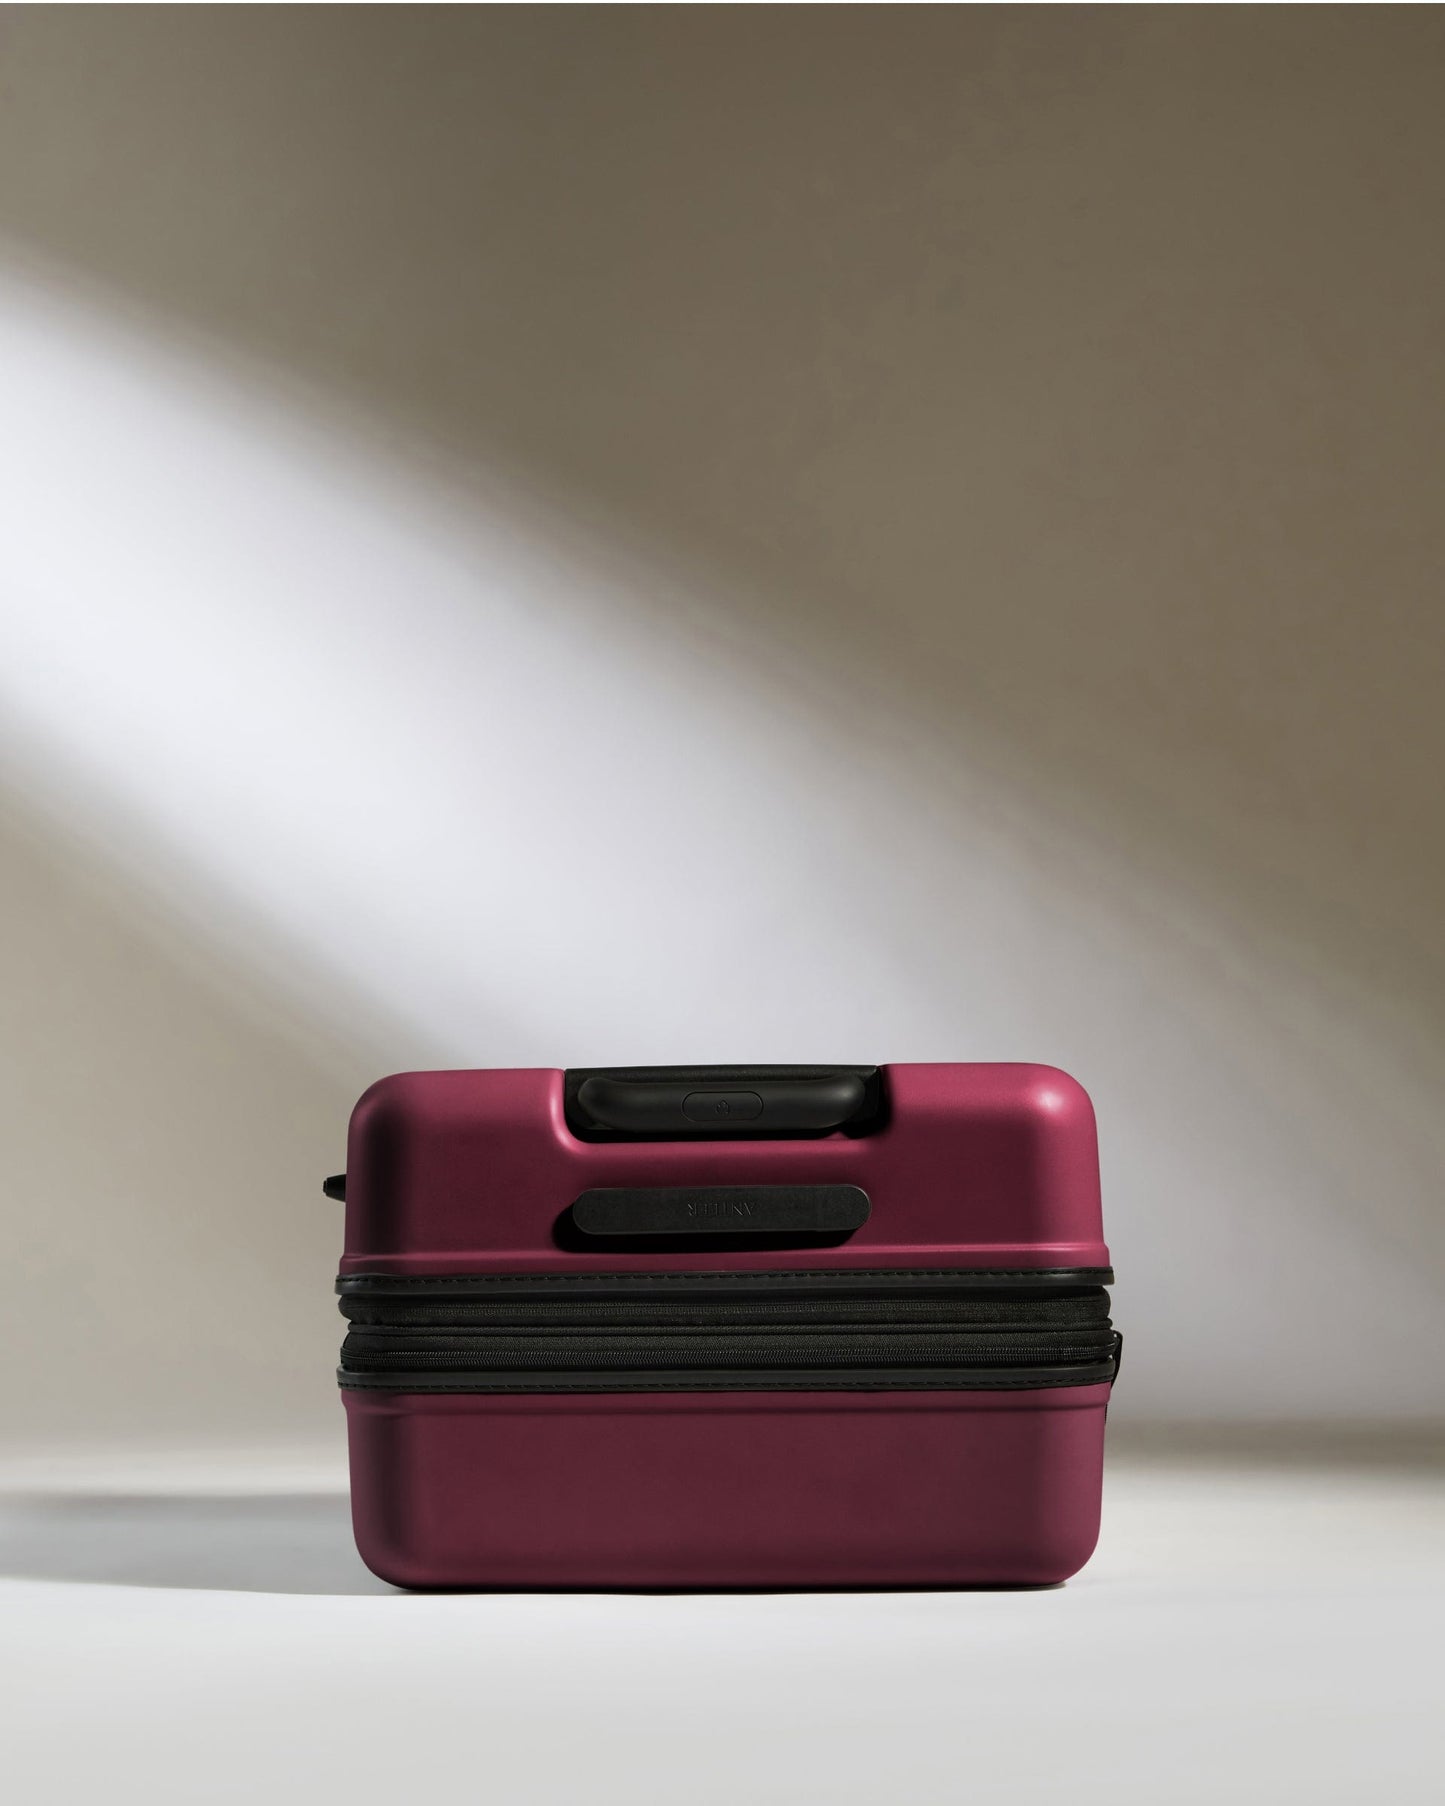 Antler Luggage -  Icon Stripe Medium in Heather Purple - Hard Suitcase Icon Stripe Medium Suitcase in Purple | Lightweight & Hard Shell Suitcase